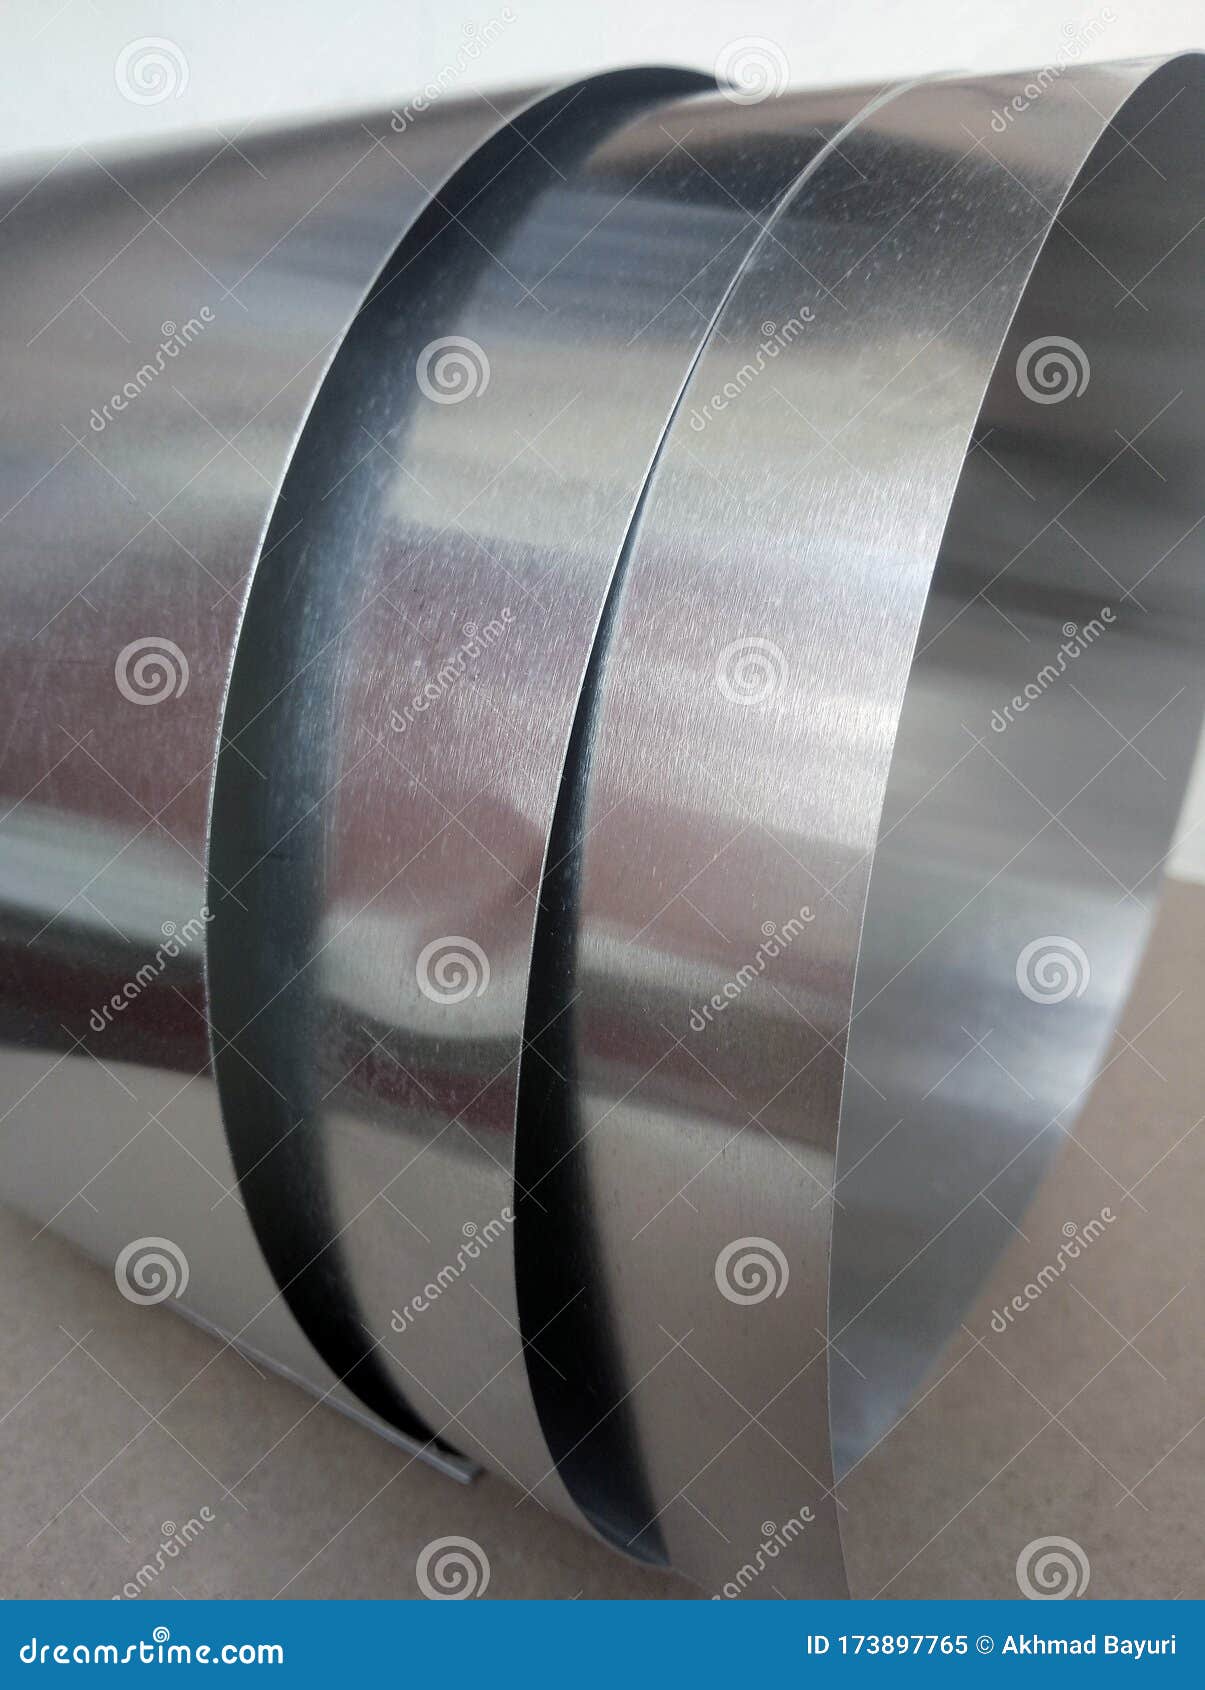 Rolls Of Thin Aluminum Sheet Metal Stock Image Image of industrial, work 173897765